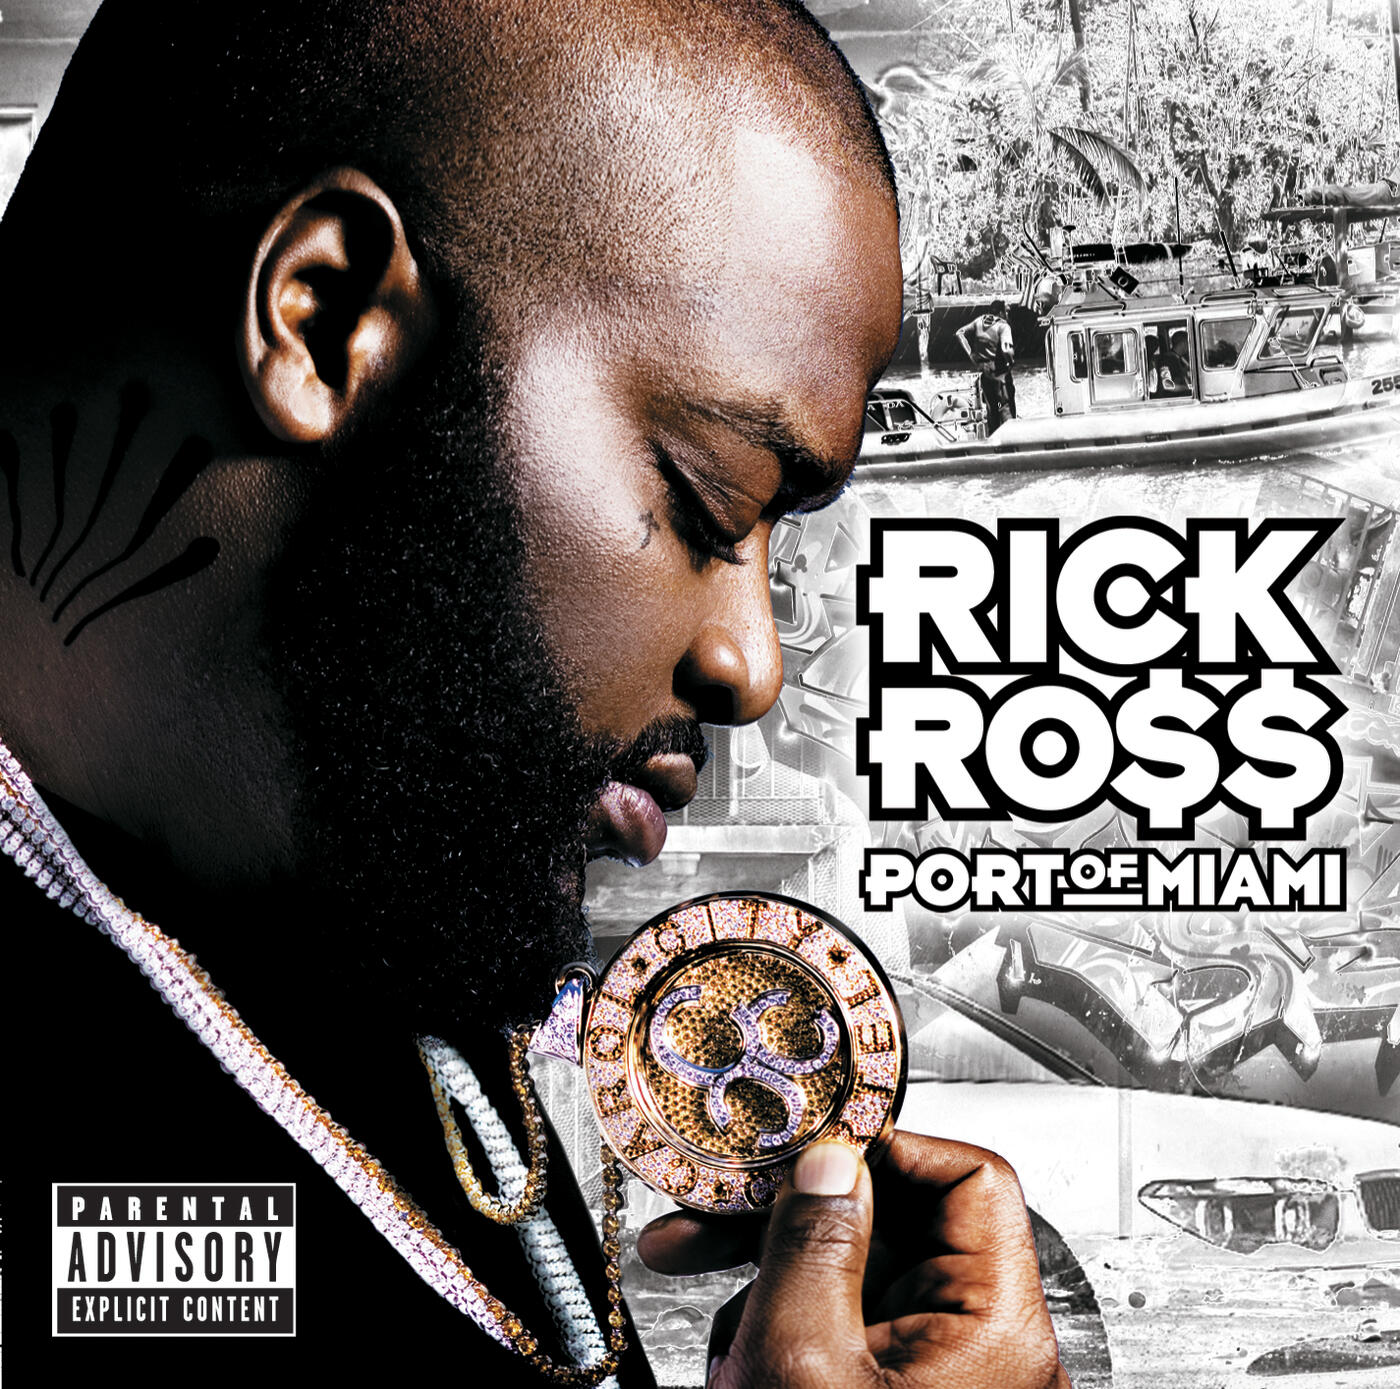 Rick Ross Biography